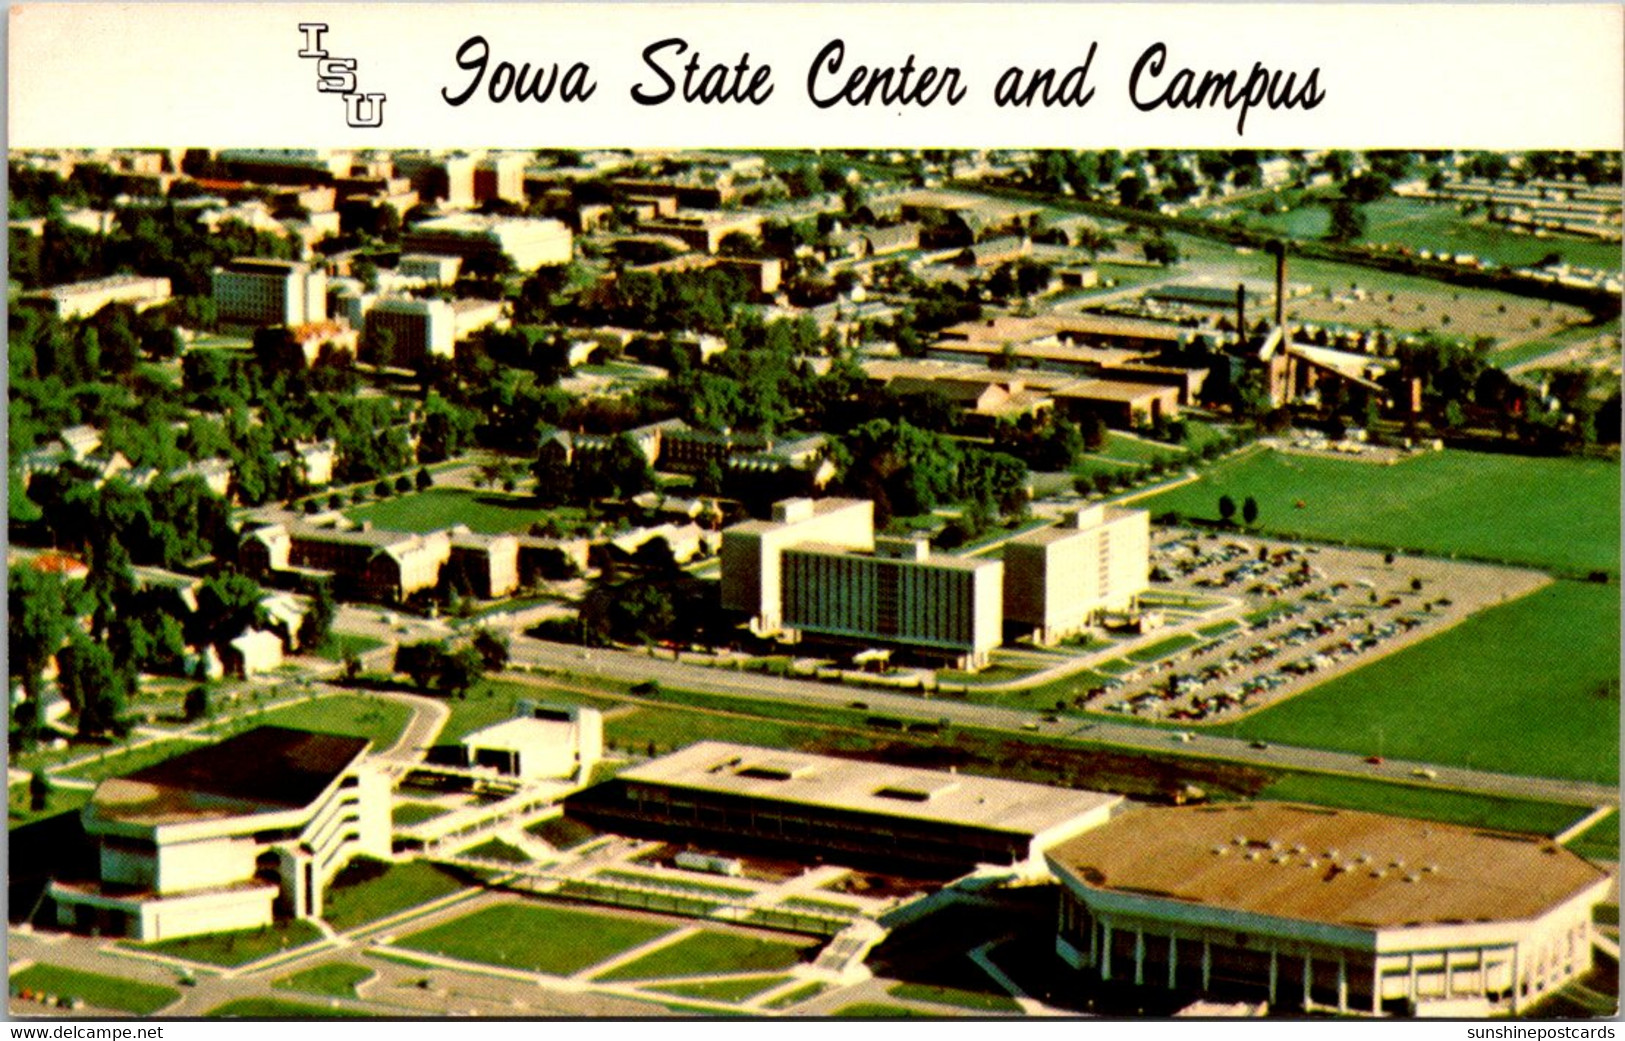 Iowa Ames Aerial View Of Iowa State Center & Iowa State University Campus - Ames